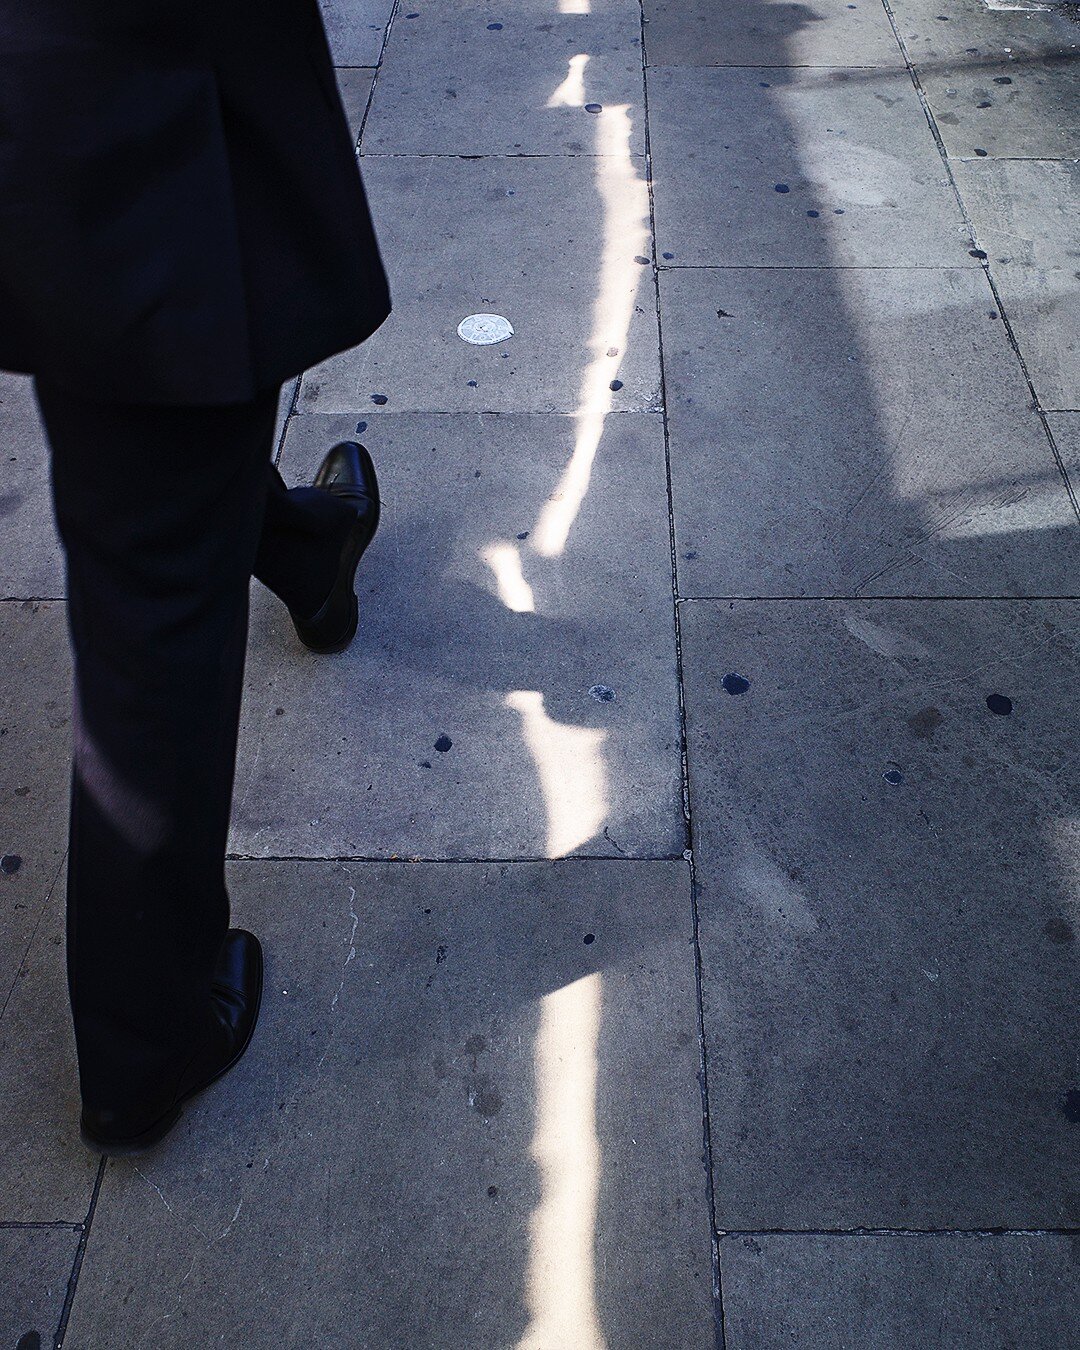 Southwark⠀⠀⠀⠀⠀⠀⠀⠀⠀
.⠀⠀⠀⠀⠀⠀⠀⠀⠀
.⠀⠀⠀⠀⠀⠀⠀⠀⠀
.⠀⠀⠀⠀⠀⠀⠀⠀⠀
.⠀⠀⠀⠀⠀⠀⠀⠀⠀
#southwark #shadows #pictureoftheday #picoftheday⠀⠀⠀⠀⠀